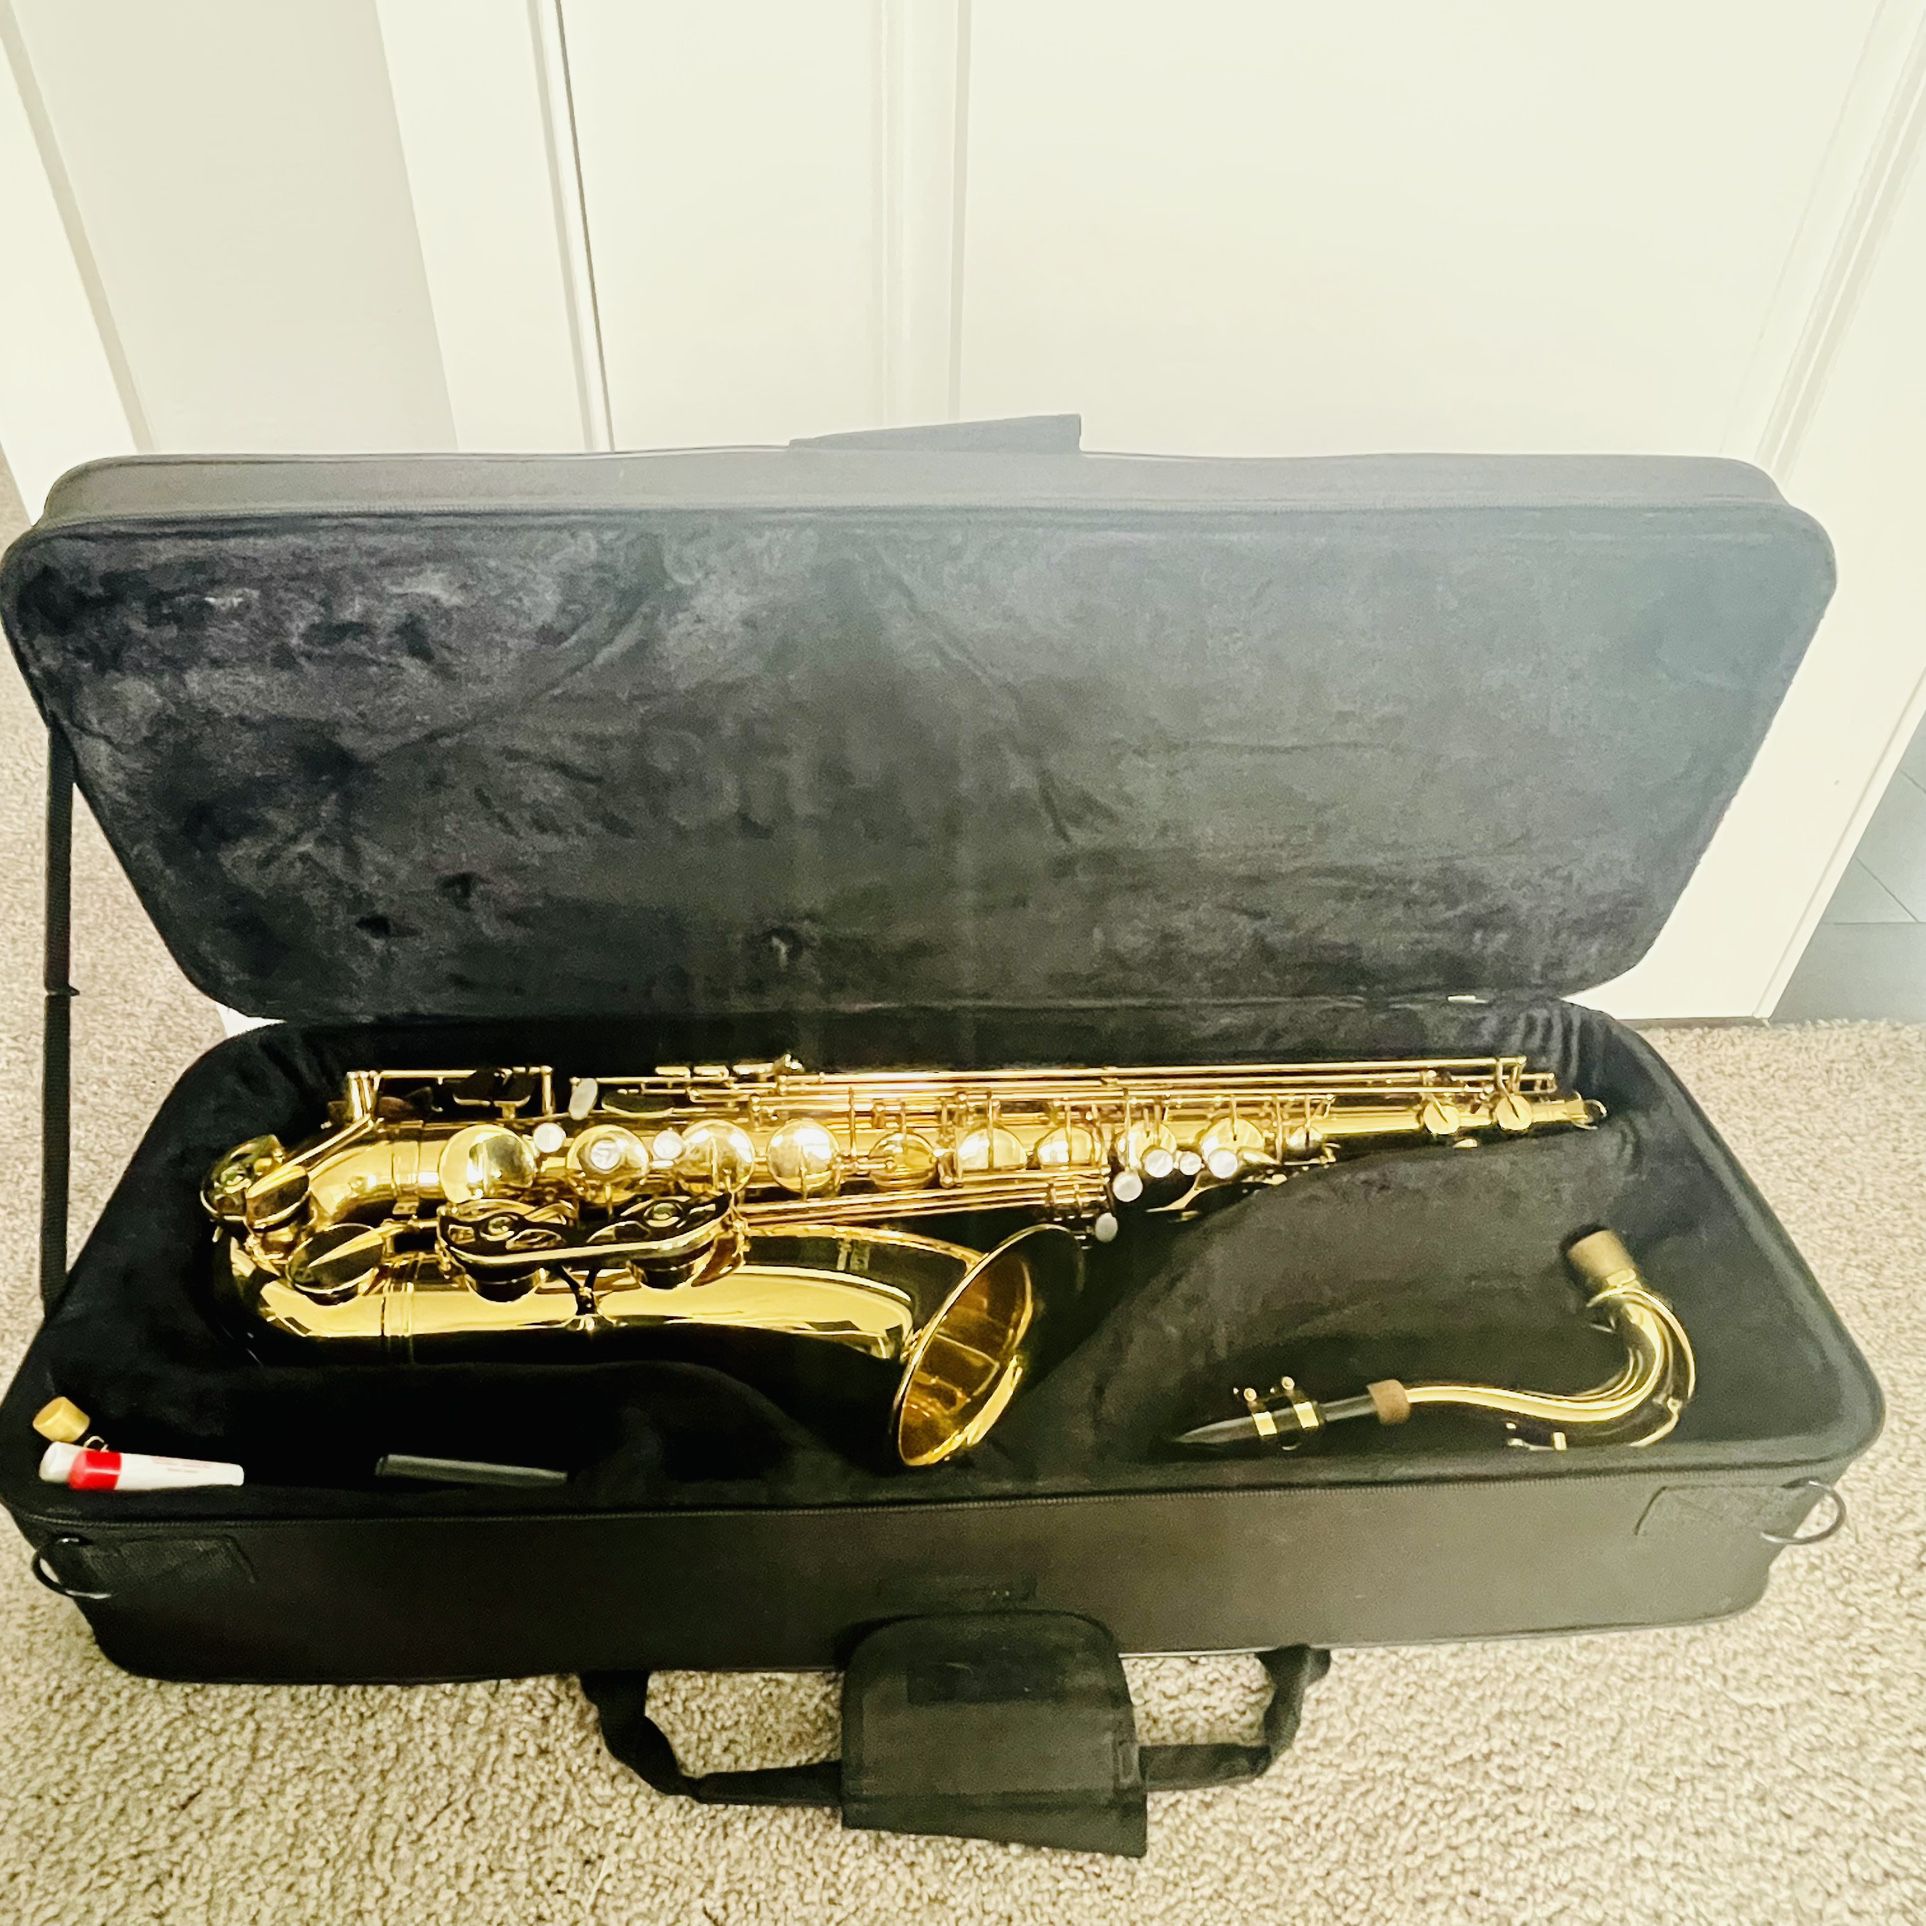 Allora Vienna Series Intermediate Tenor Saxophone AATS-501 - Lacquer With Free Guitar